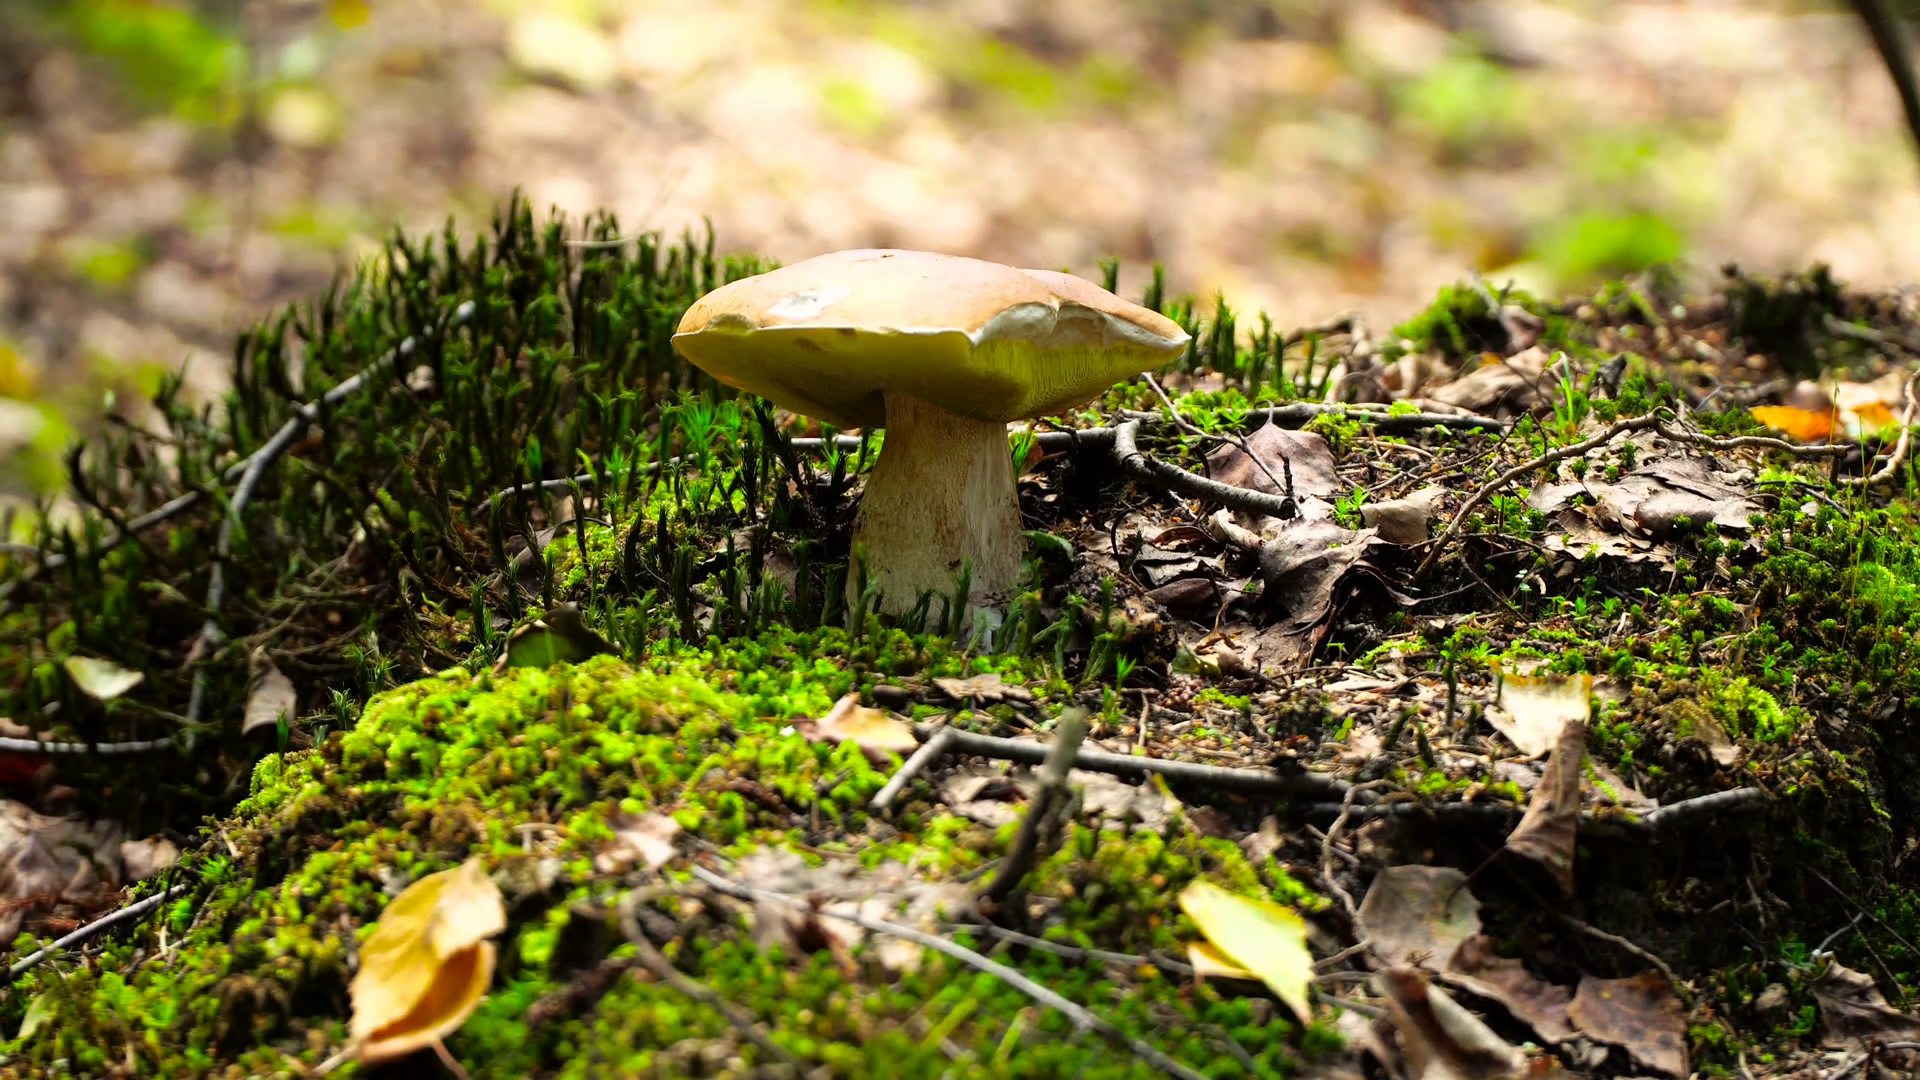 The edible boletus mushroom in a beautiful green moss. among the ...